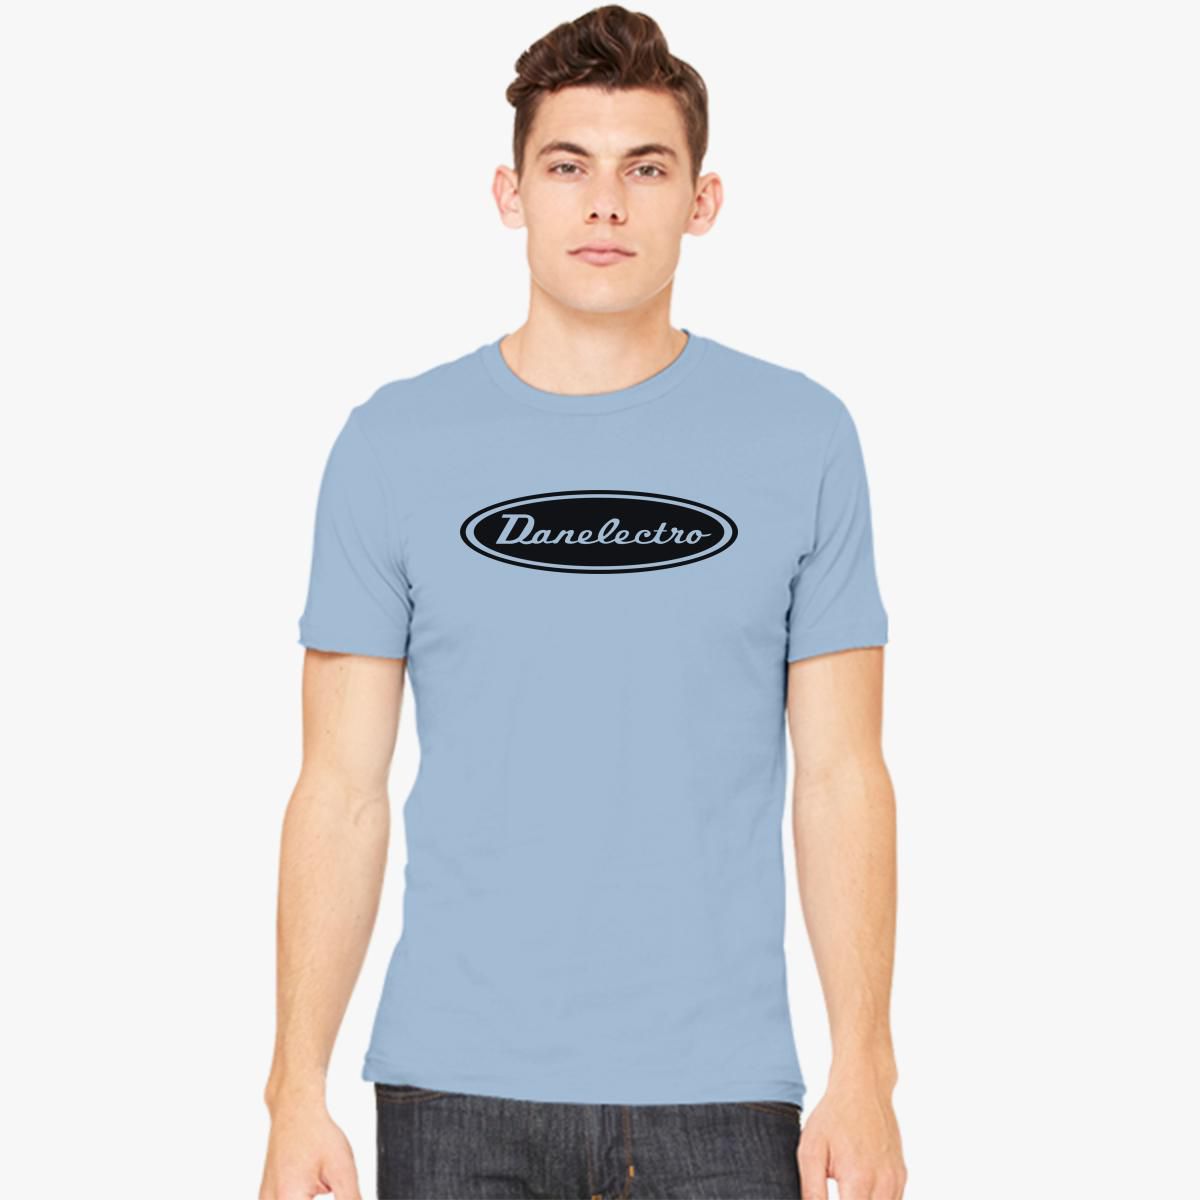 petulance Ryg, ryg, ryg del hævn Danelectro Men's T-shirt - Customon